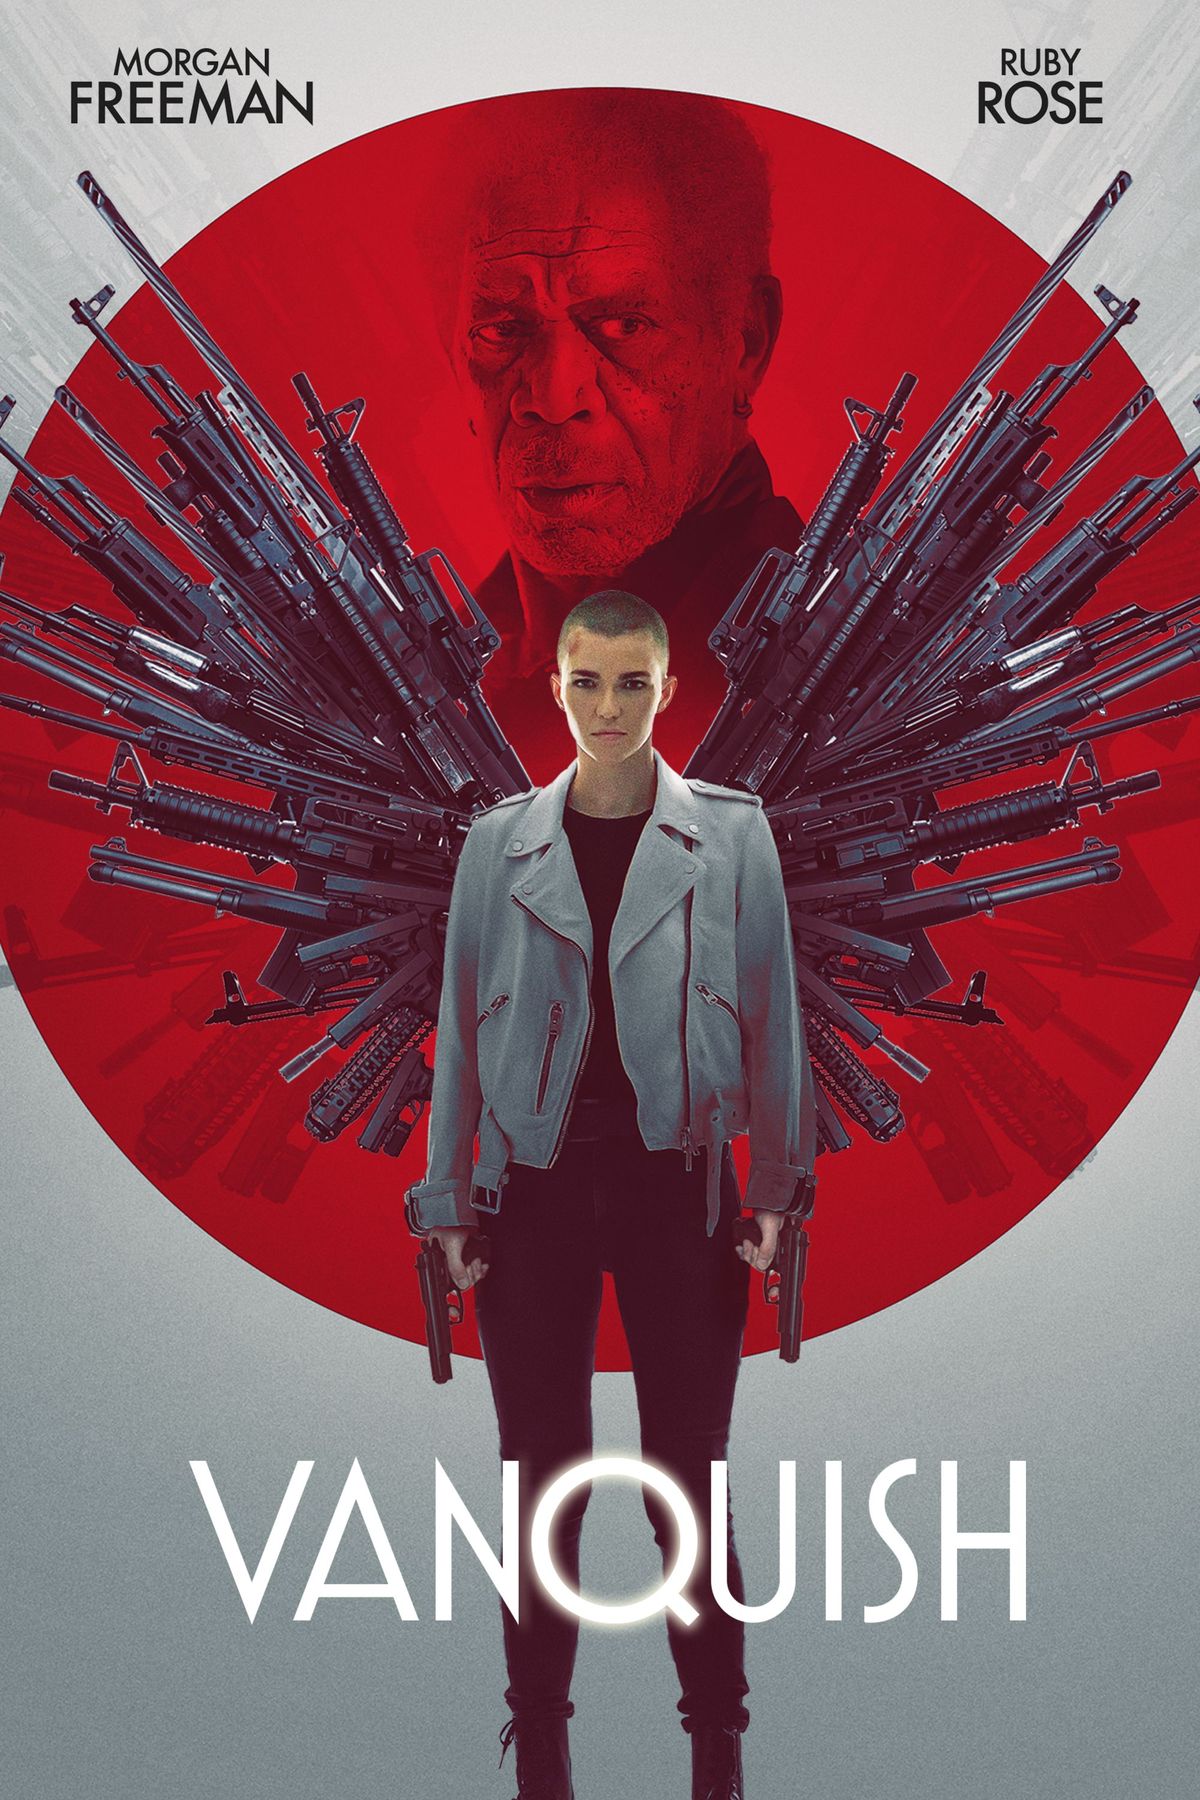 ASSISTIR: Ruby Rose se torna completo John Wick no trailer Vanquish